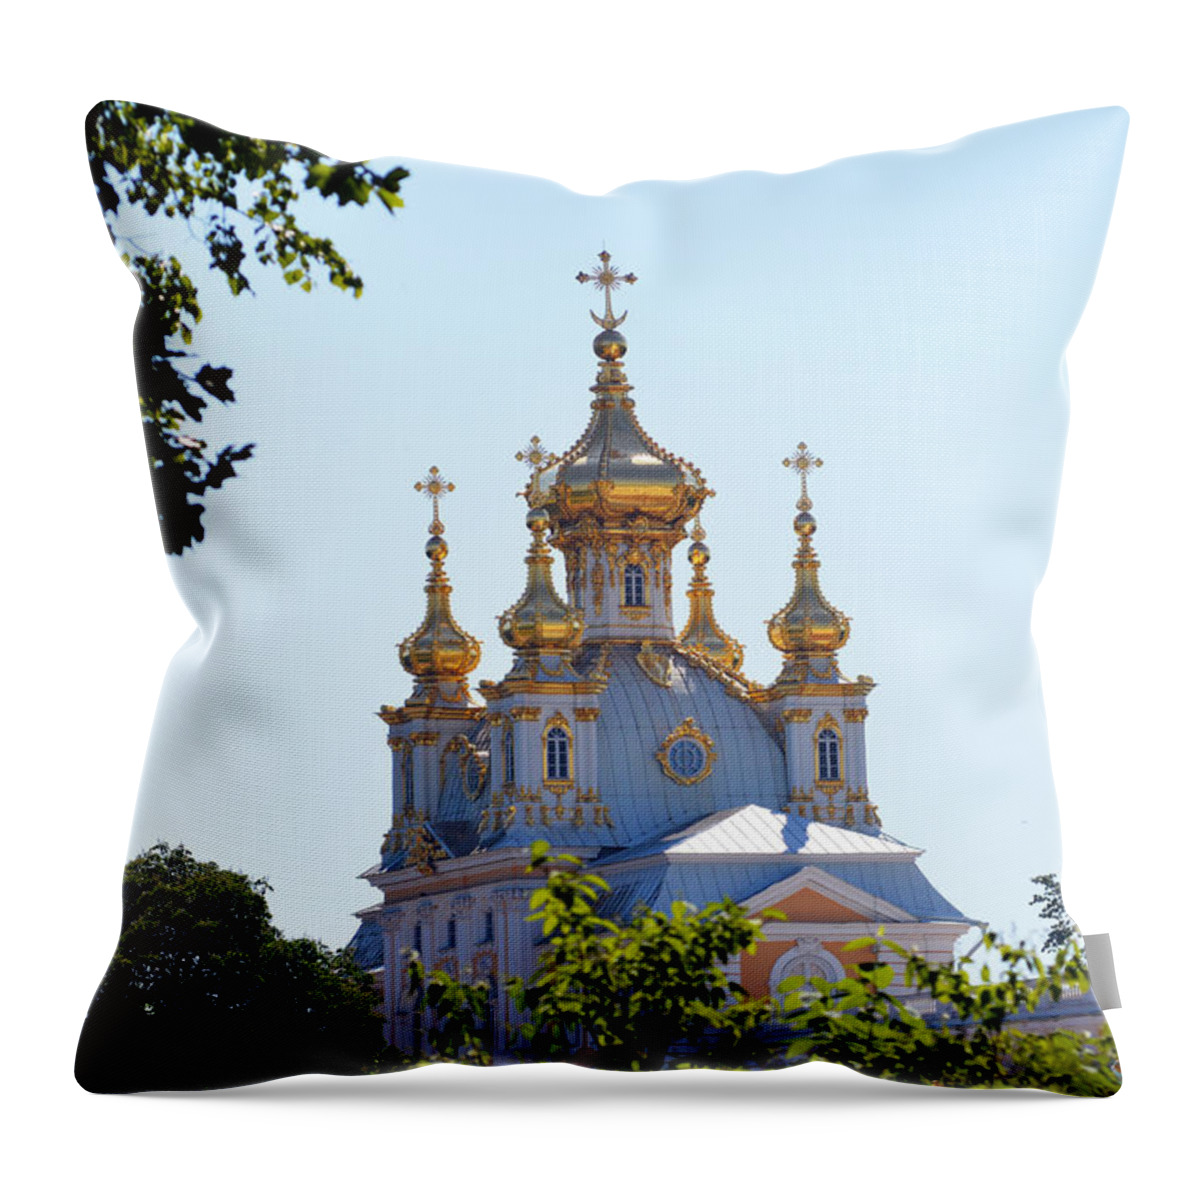 Peterhof Palace Throw Pillow featuring the photograph Church of Grand Peterhof Palace by Terence Davis